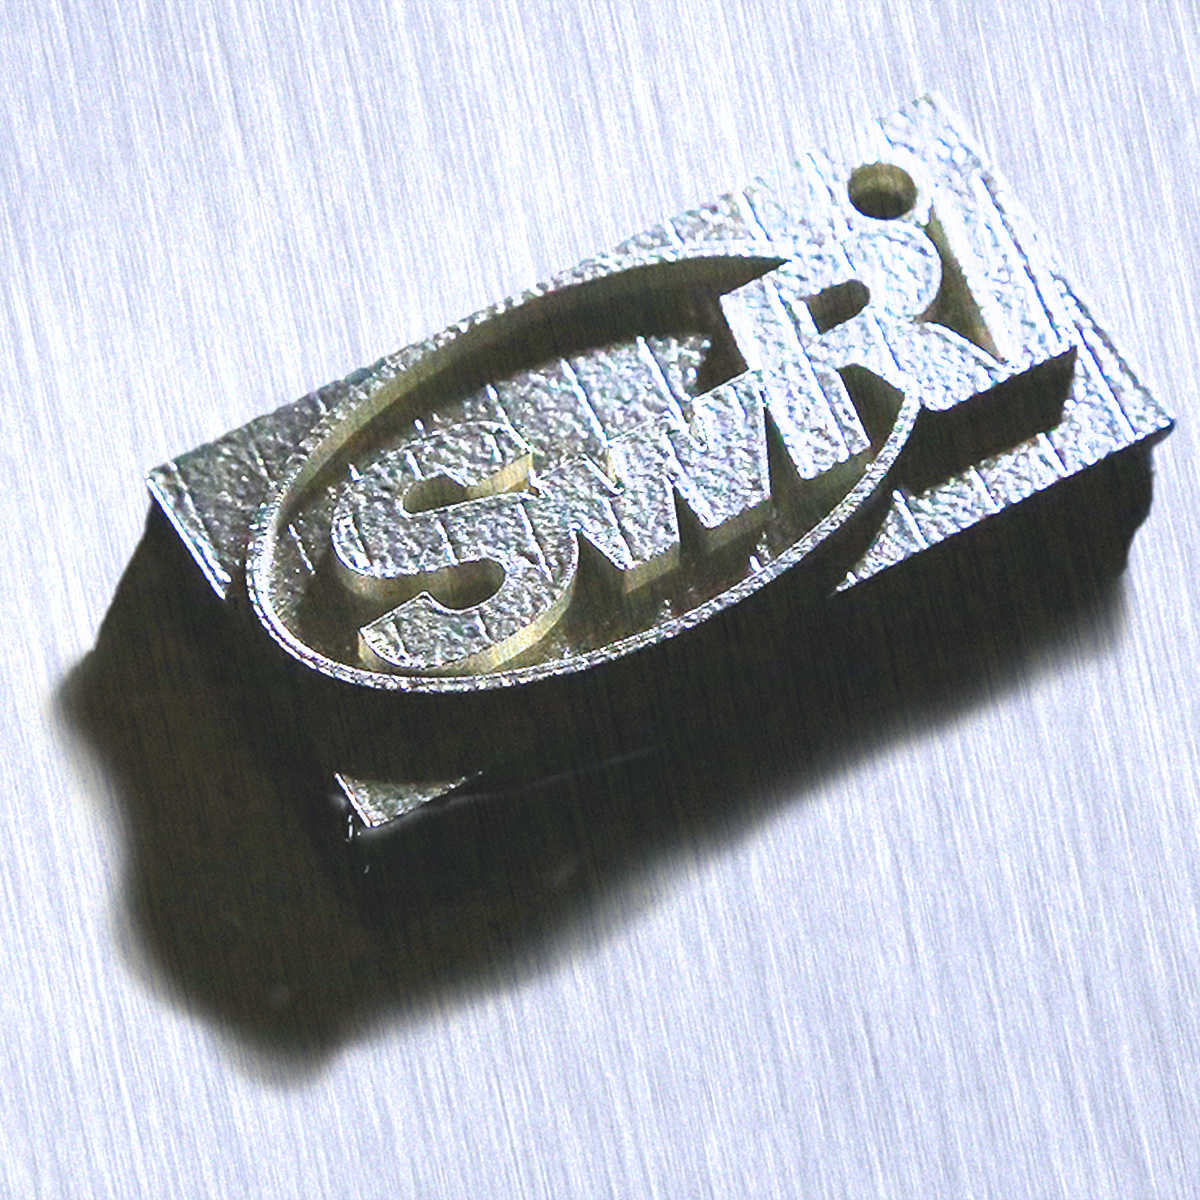 3D SwRI logo created using additive manufacturing 